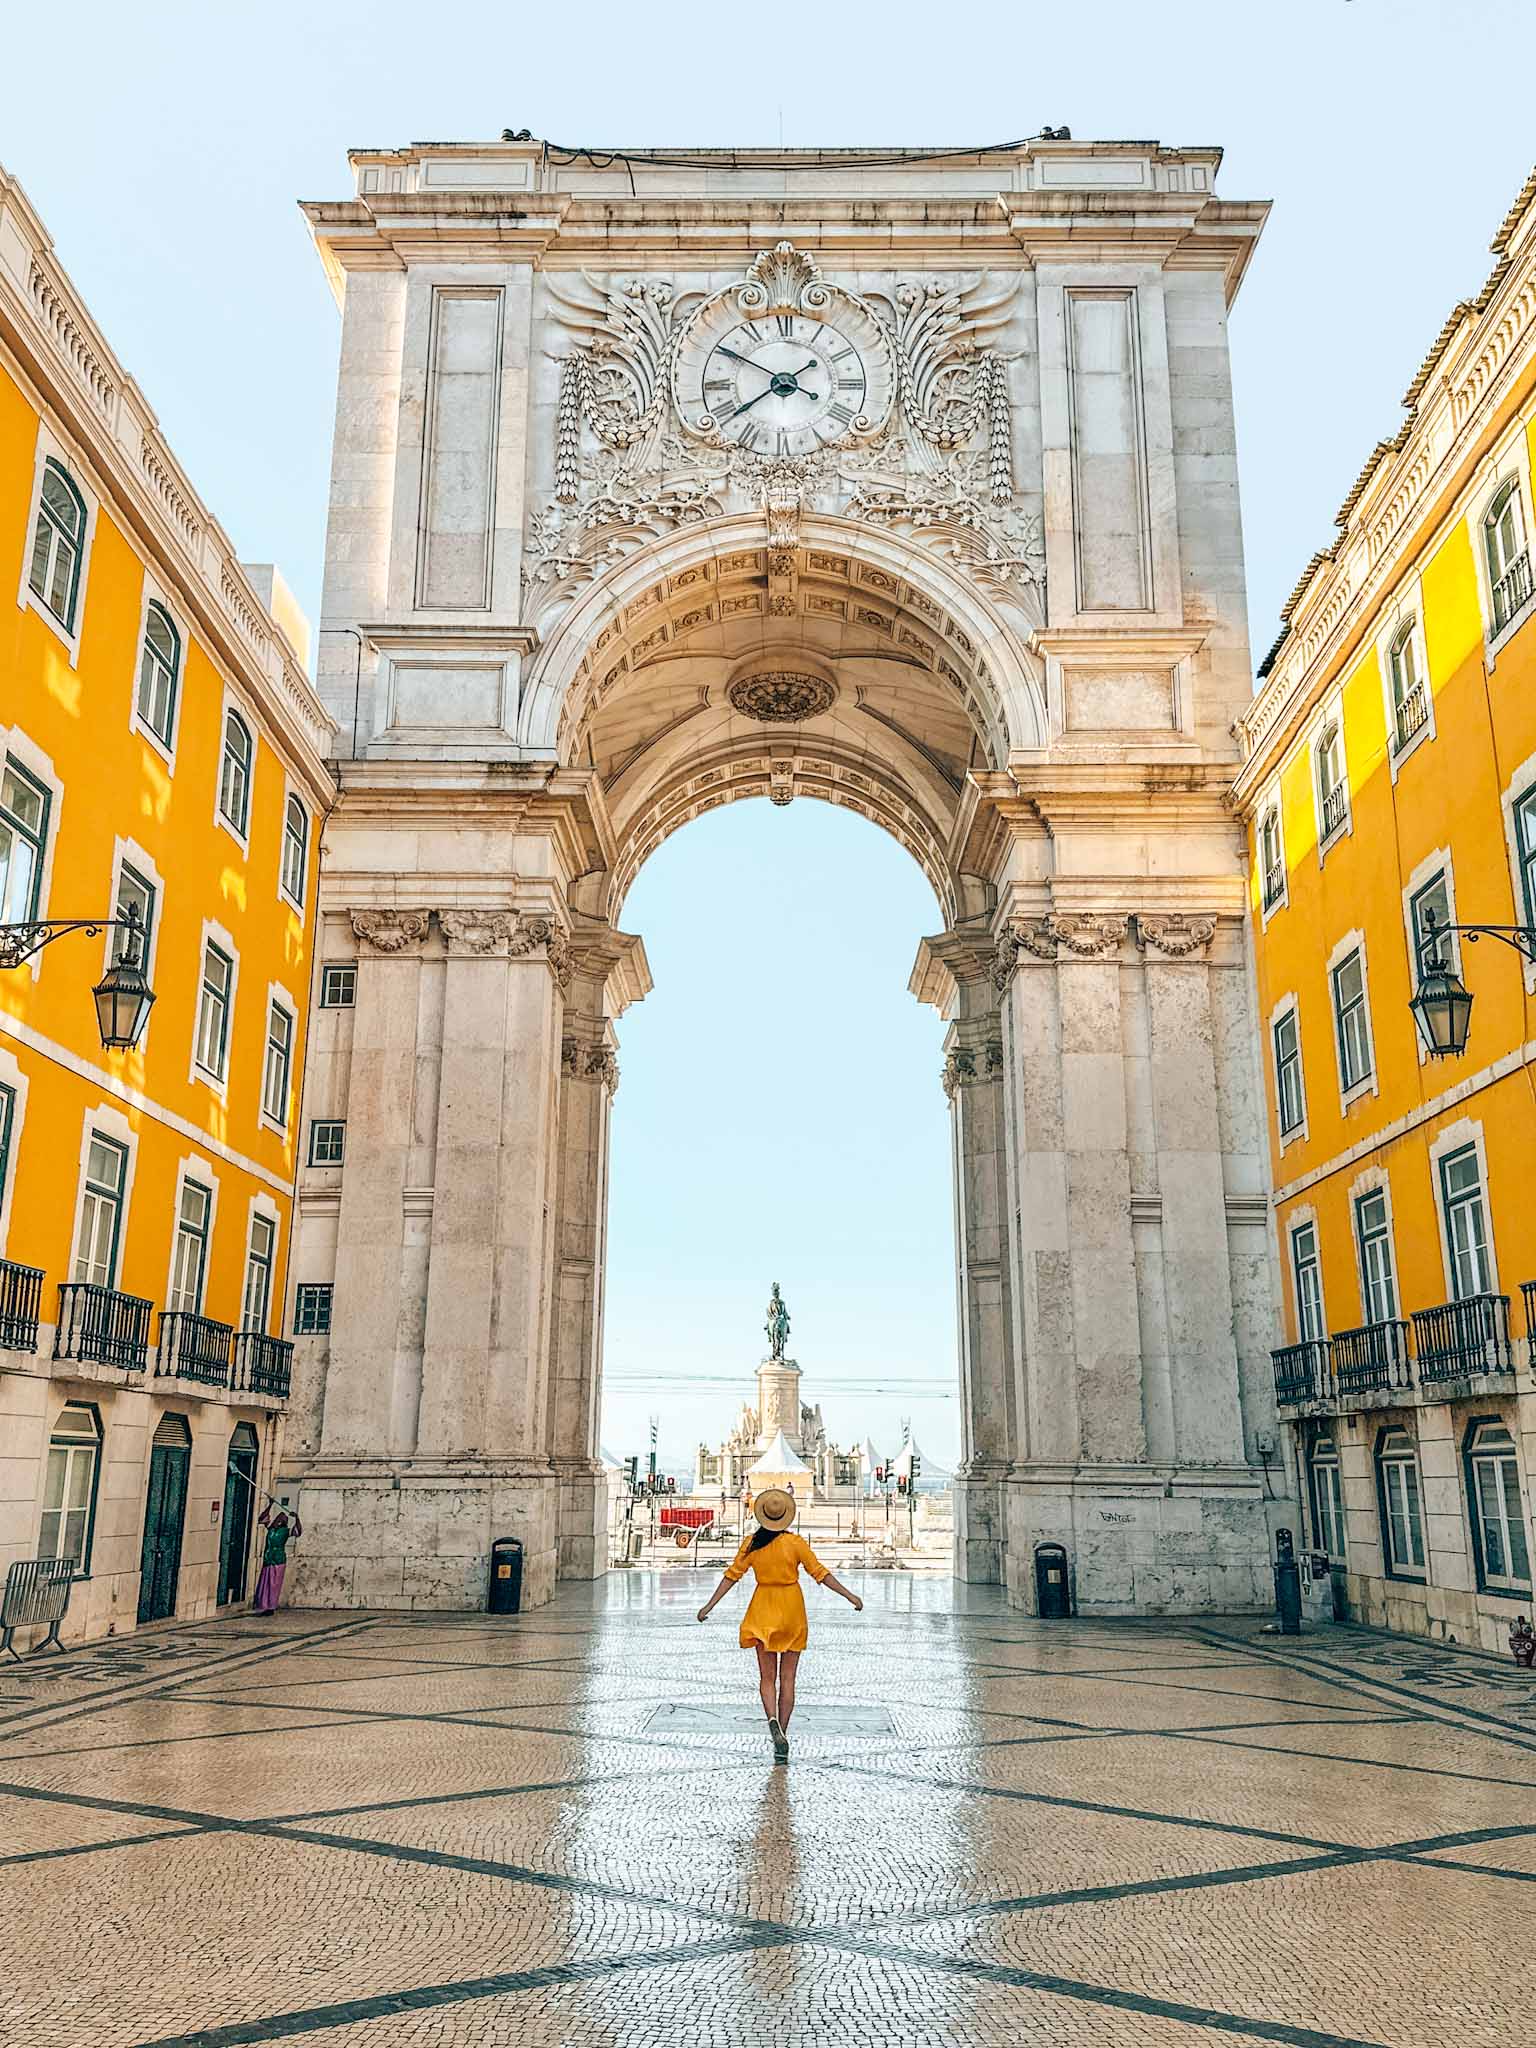 Best Instagram photo spots in Lisbon - Arco da Rua Augusta